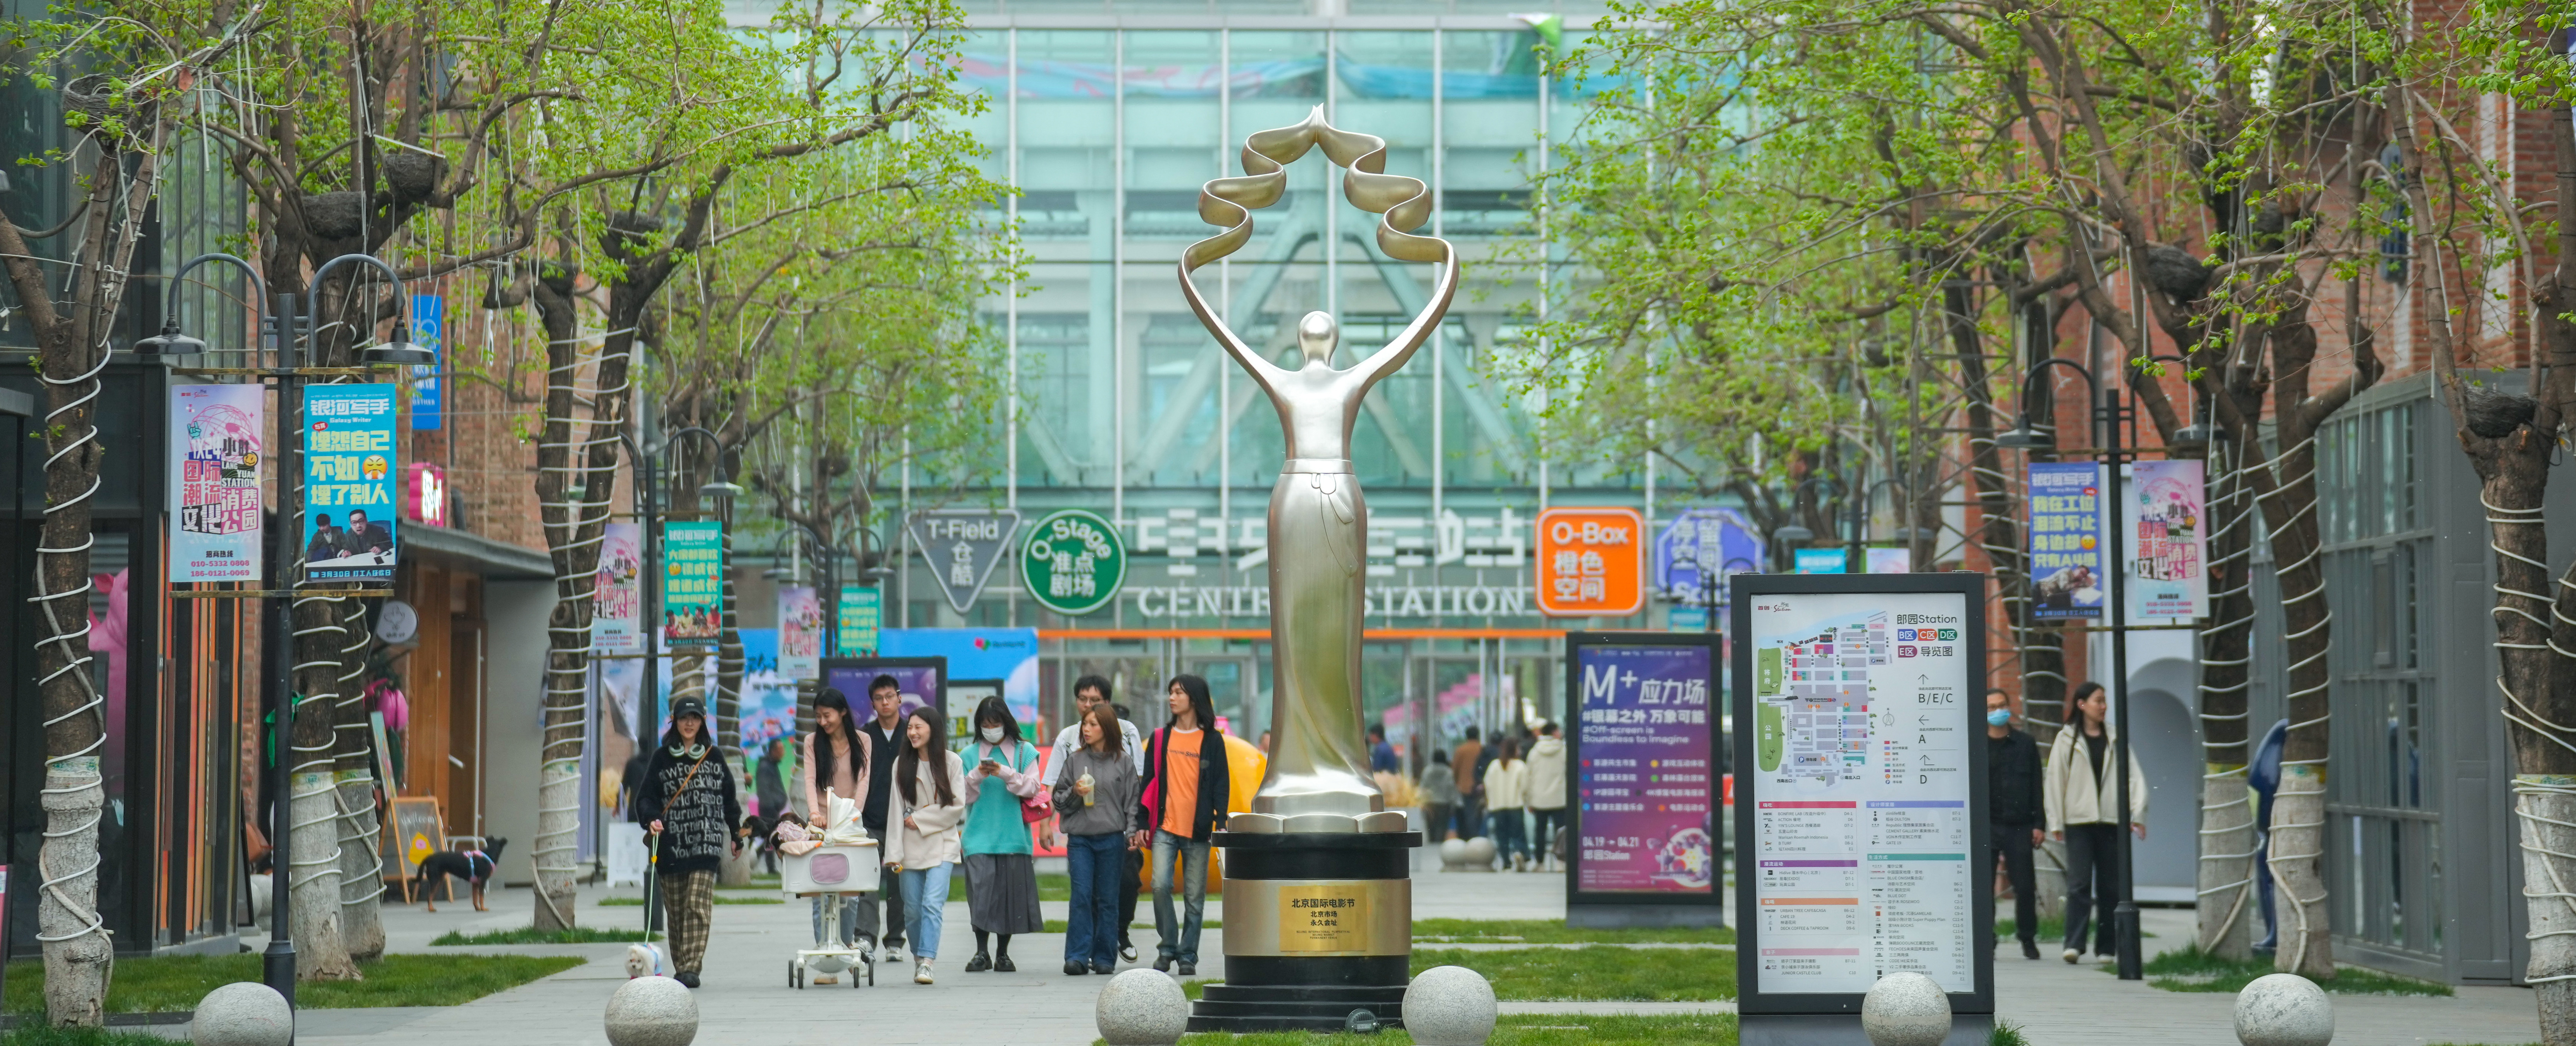 The Station: Beijing International Film Festival's permanent venue